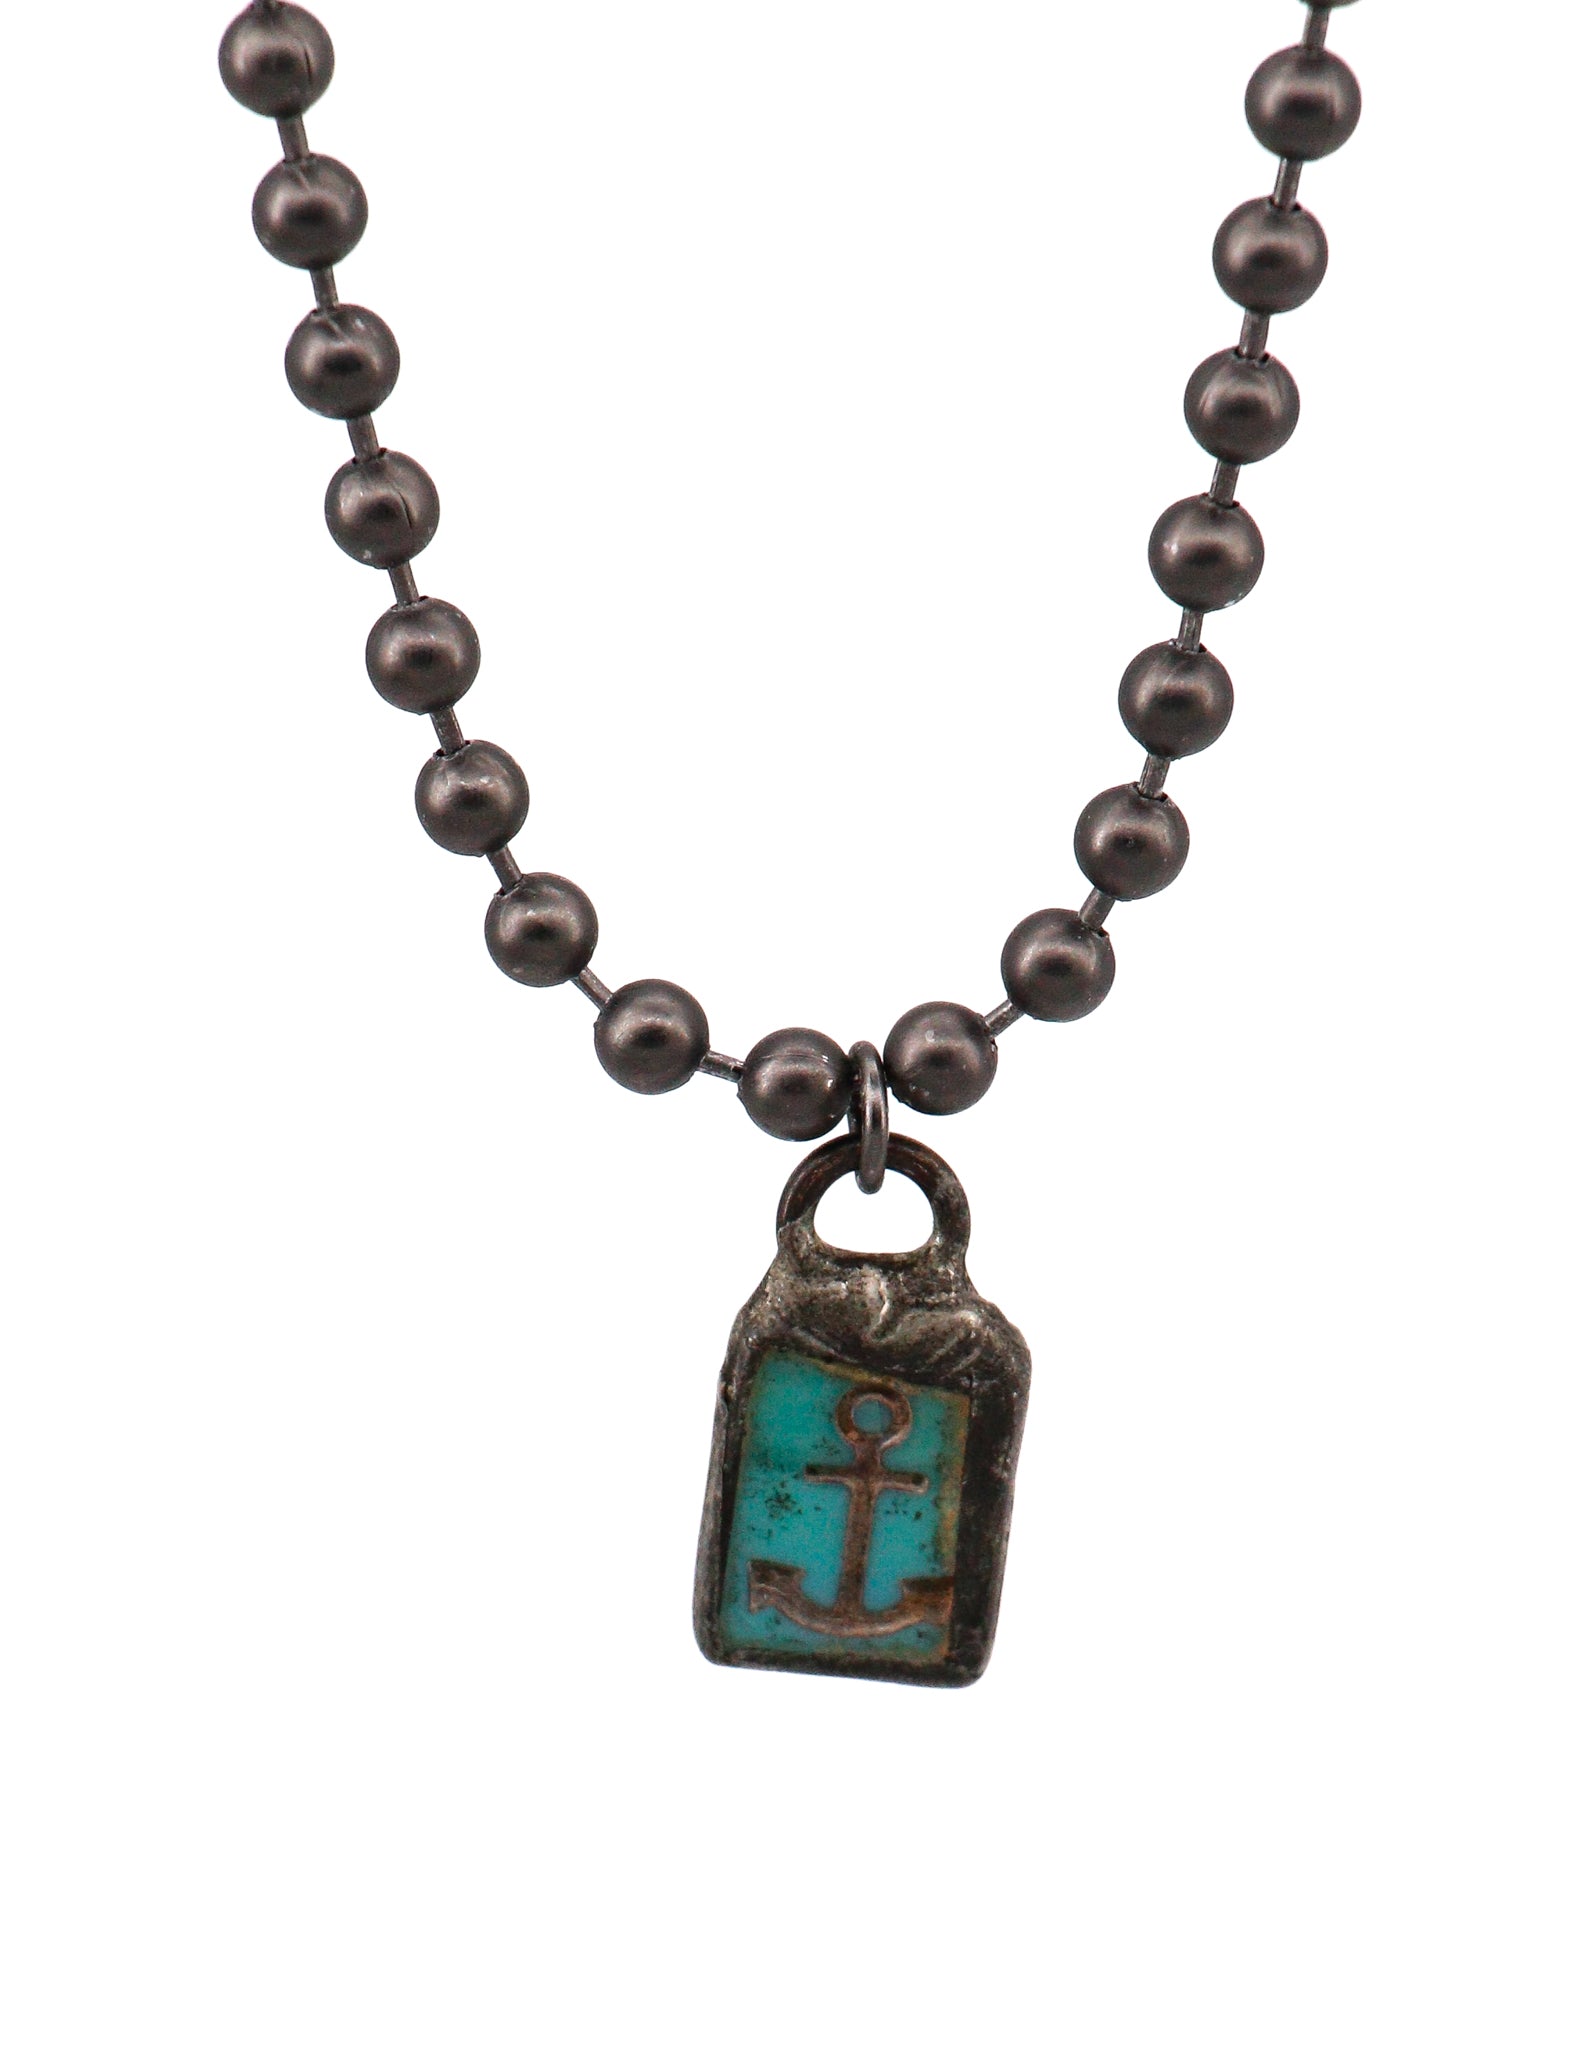 Gun metal ball chain necklace with an anchor pendant